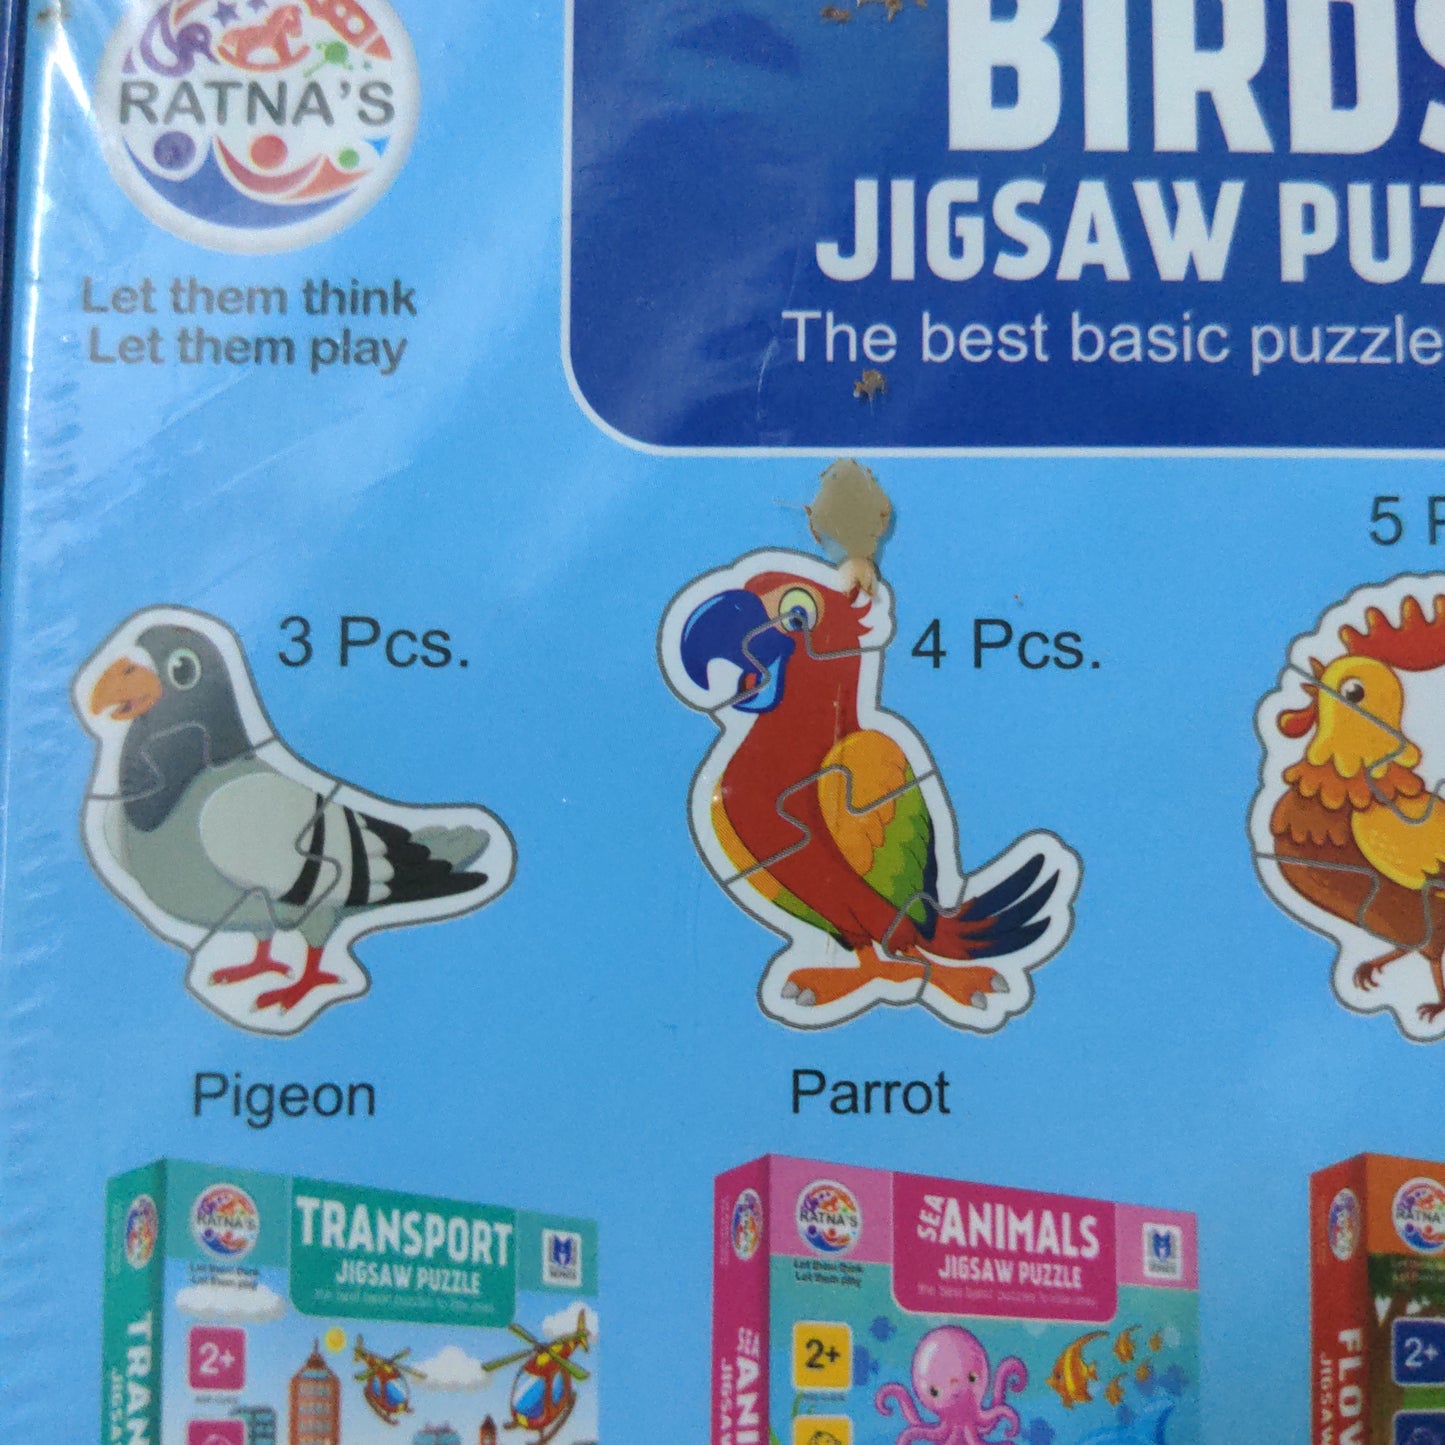 Birds - Jigsaw Puzzle